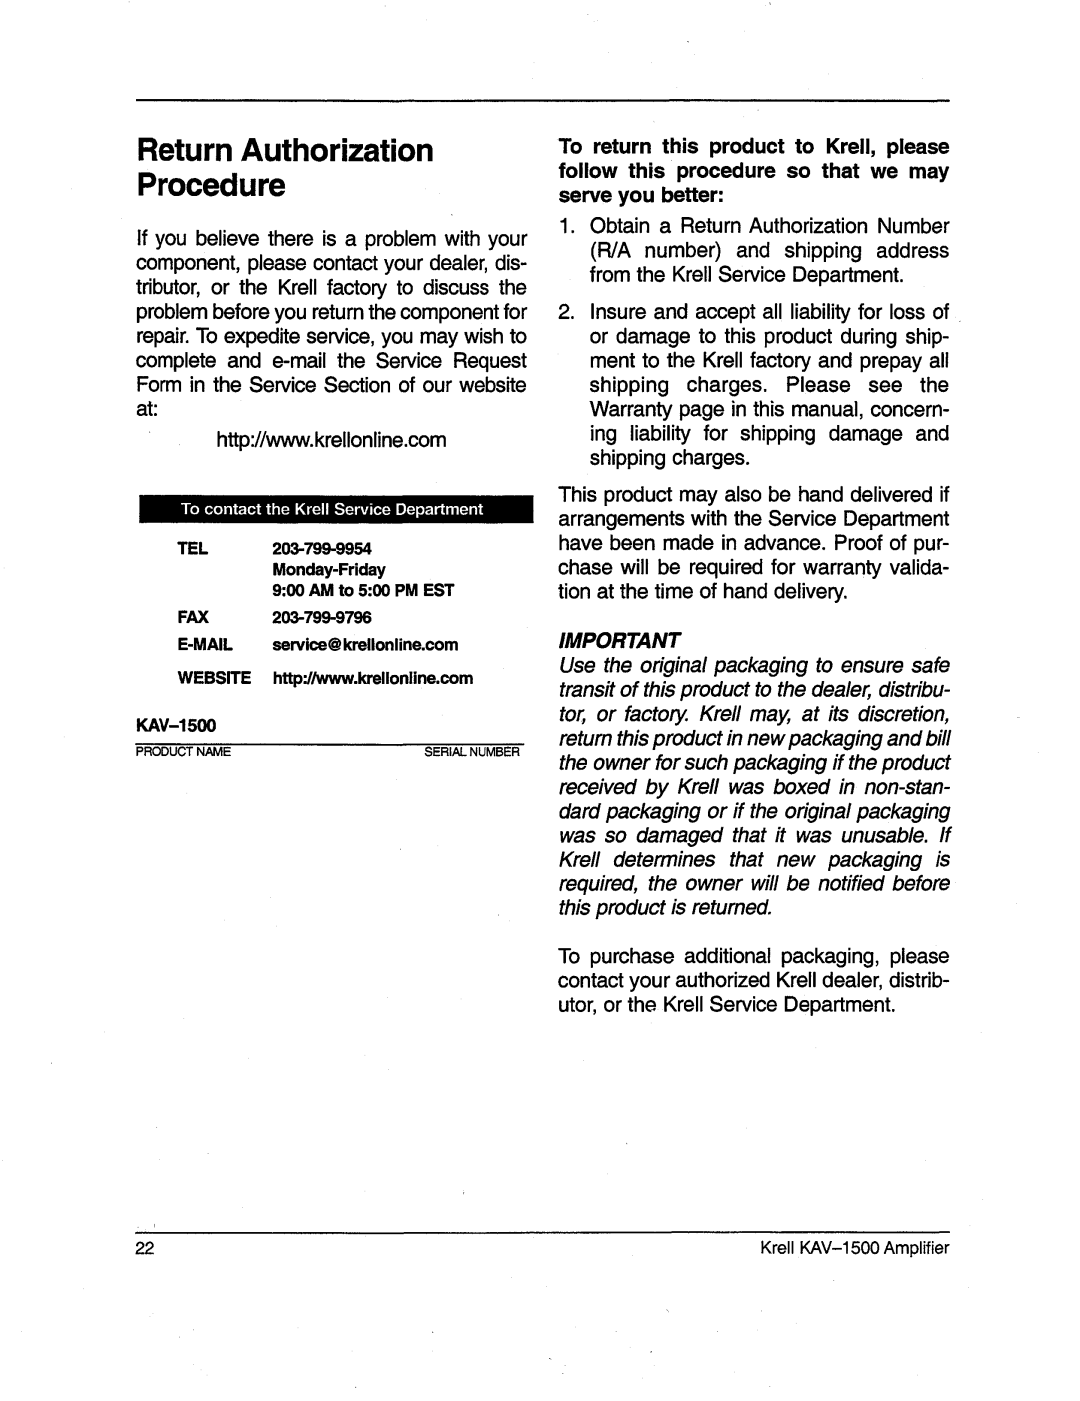 Krell Industries KAV-1500 manual ReturnAuthorization Procedure 